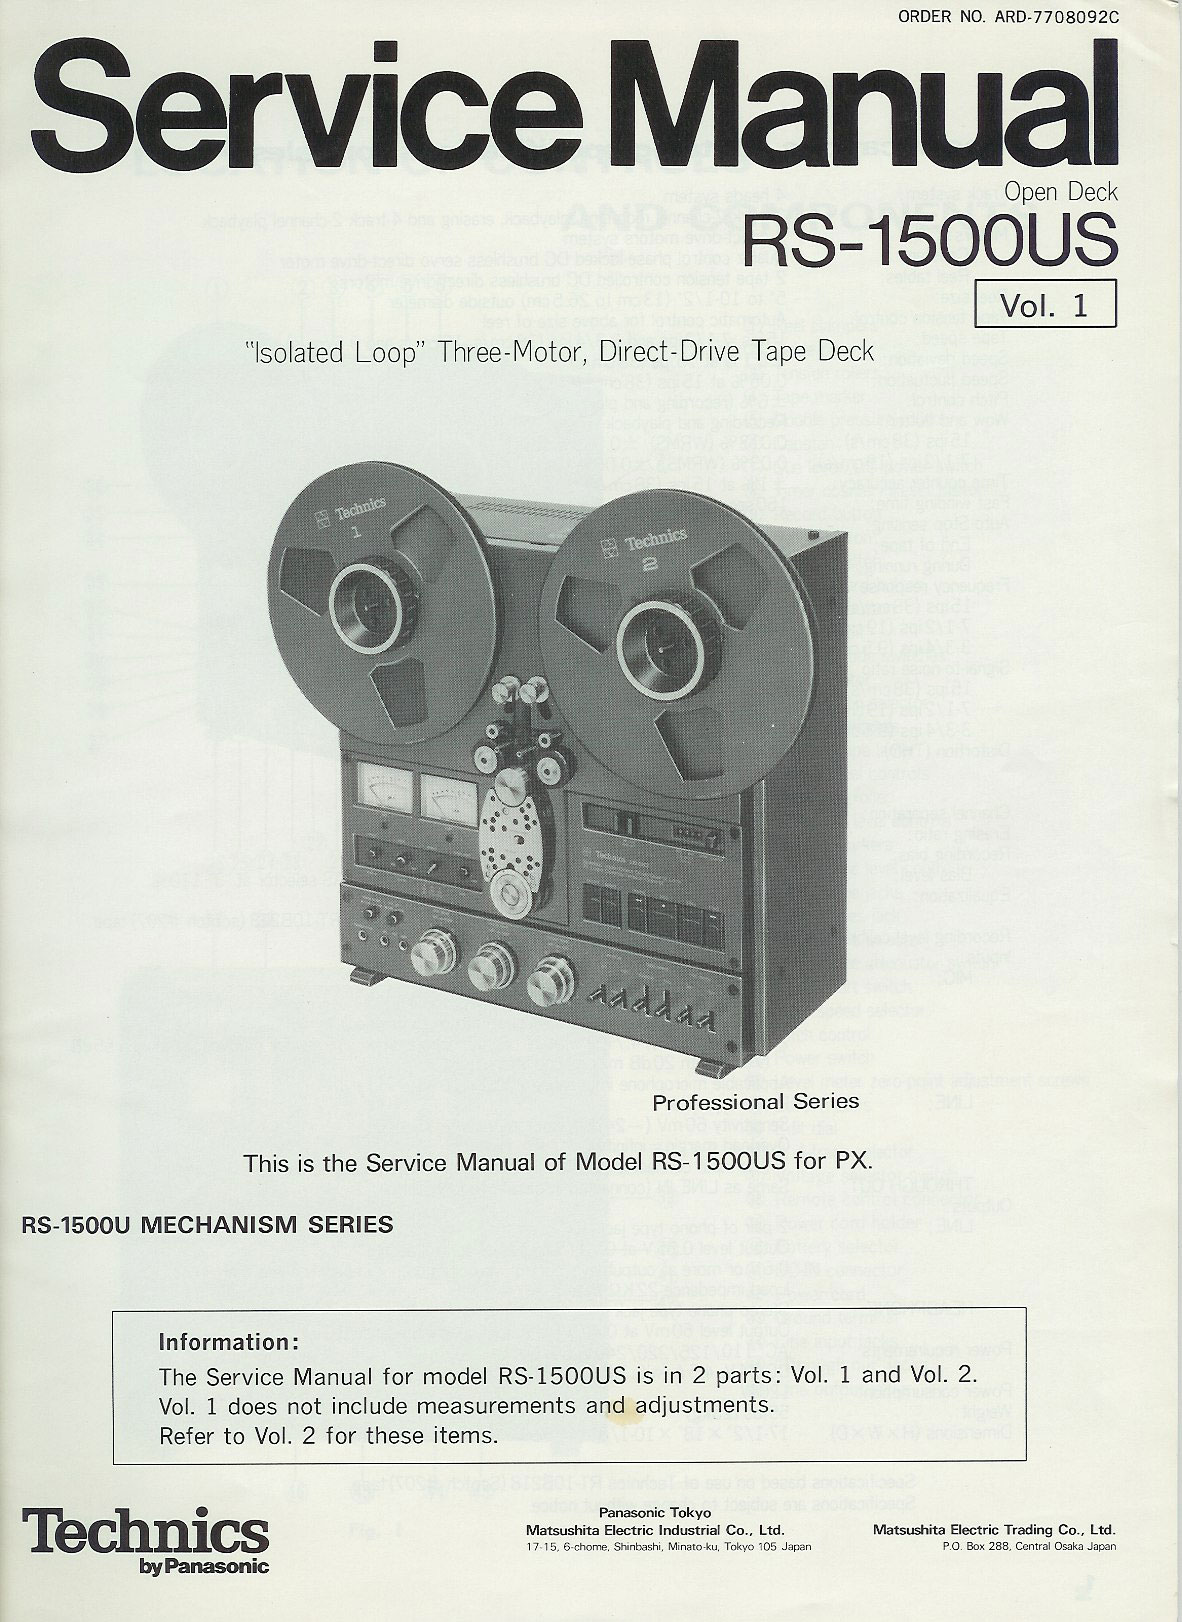 Technics RS-1500 Service Manual cover